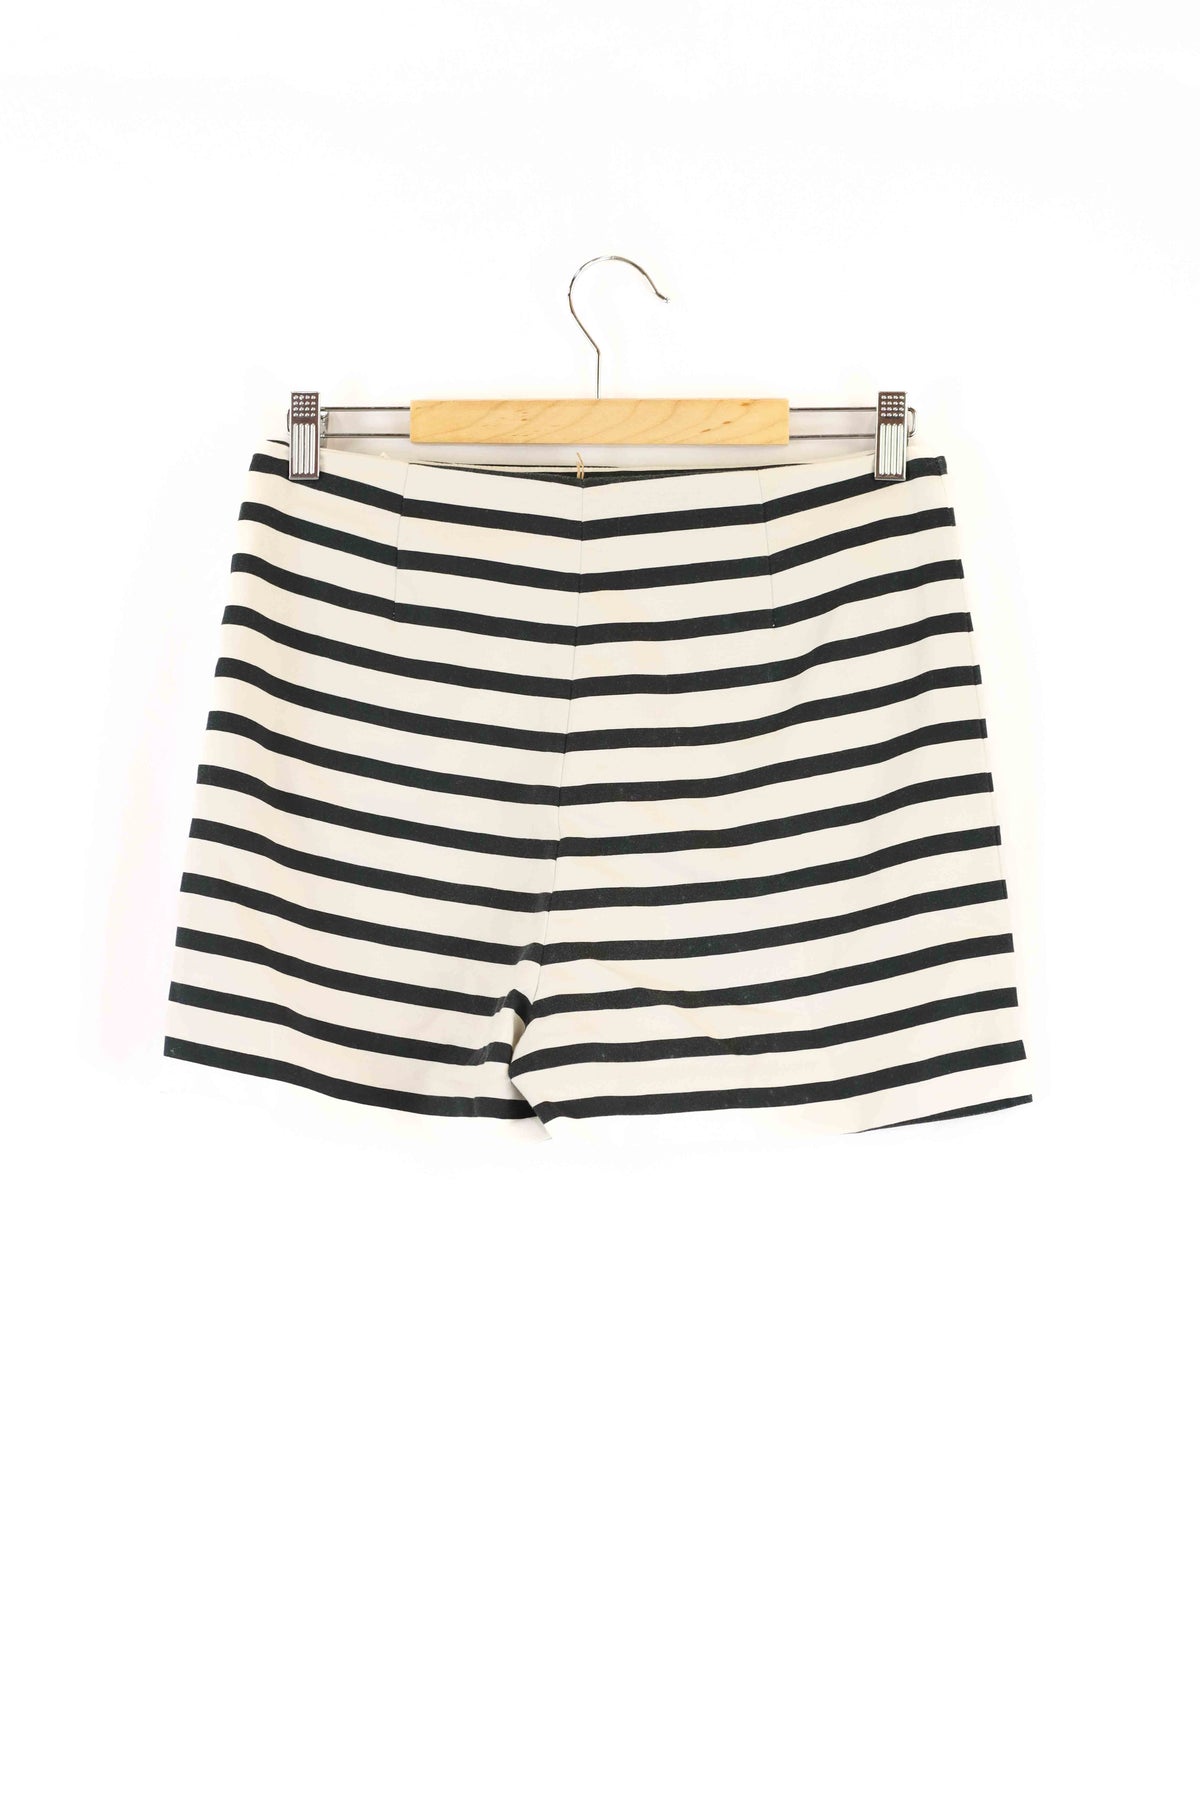 Zara Black White Stripe Shorts M